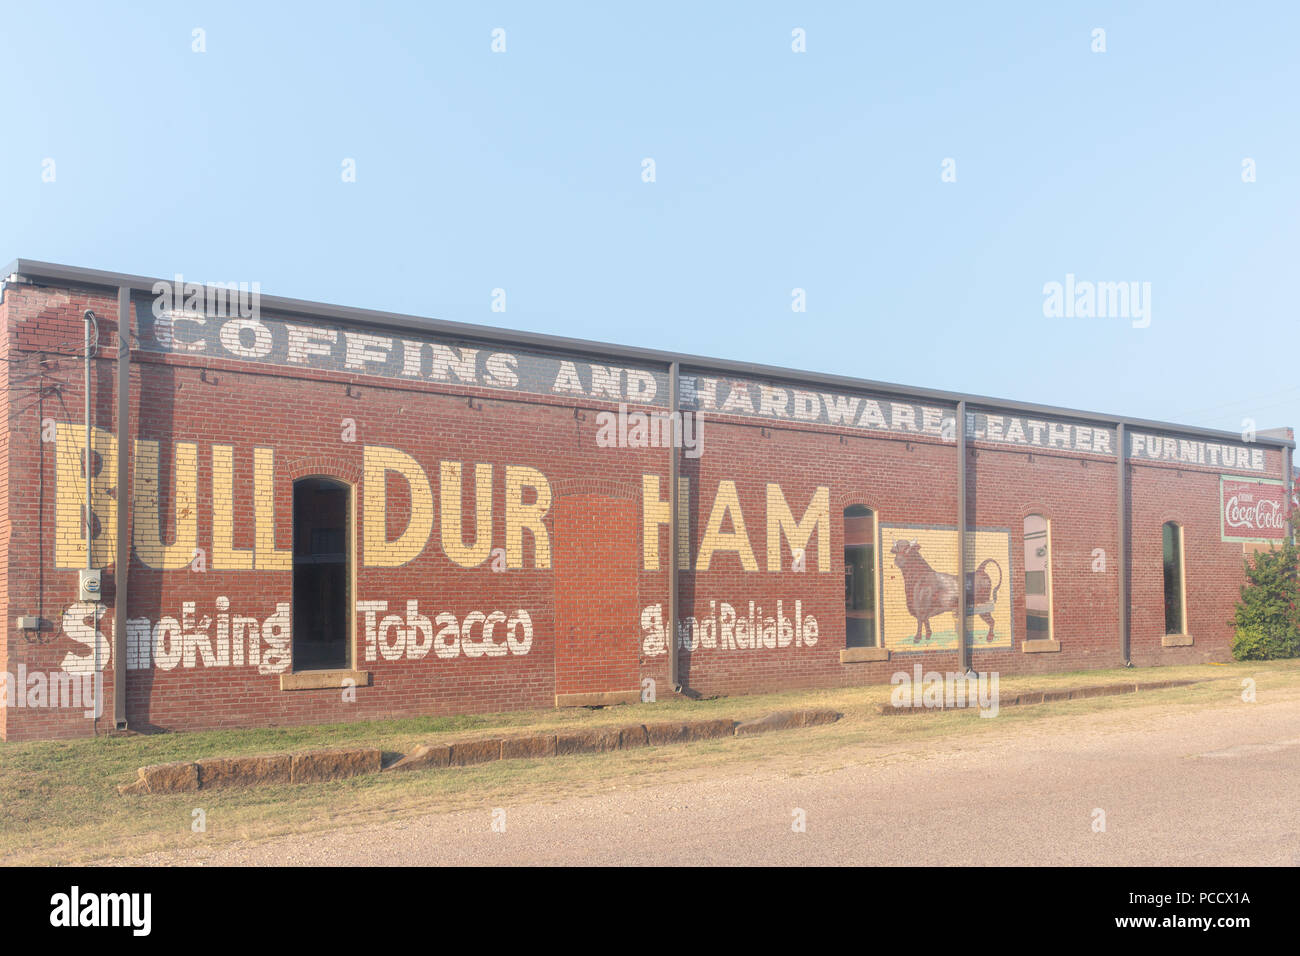 building ads in Baird Texas featuring Bull Durham Stock Photo